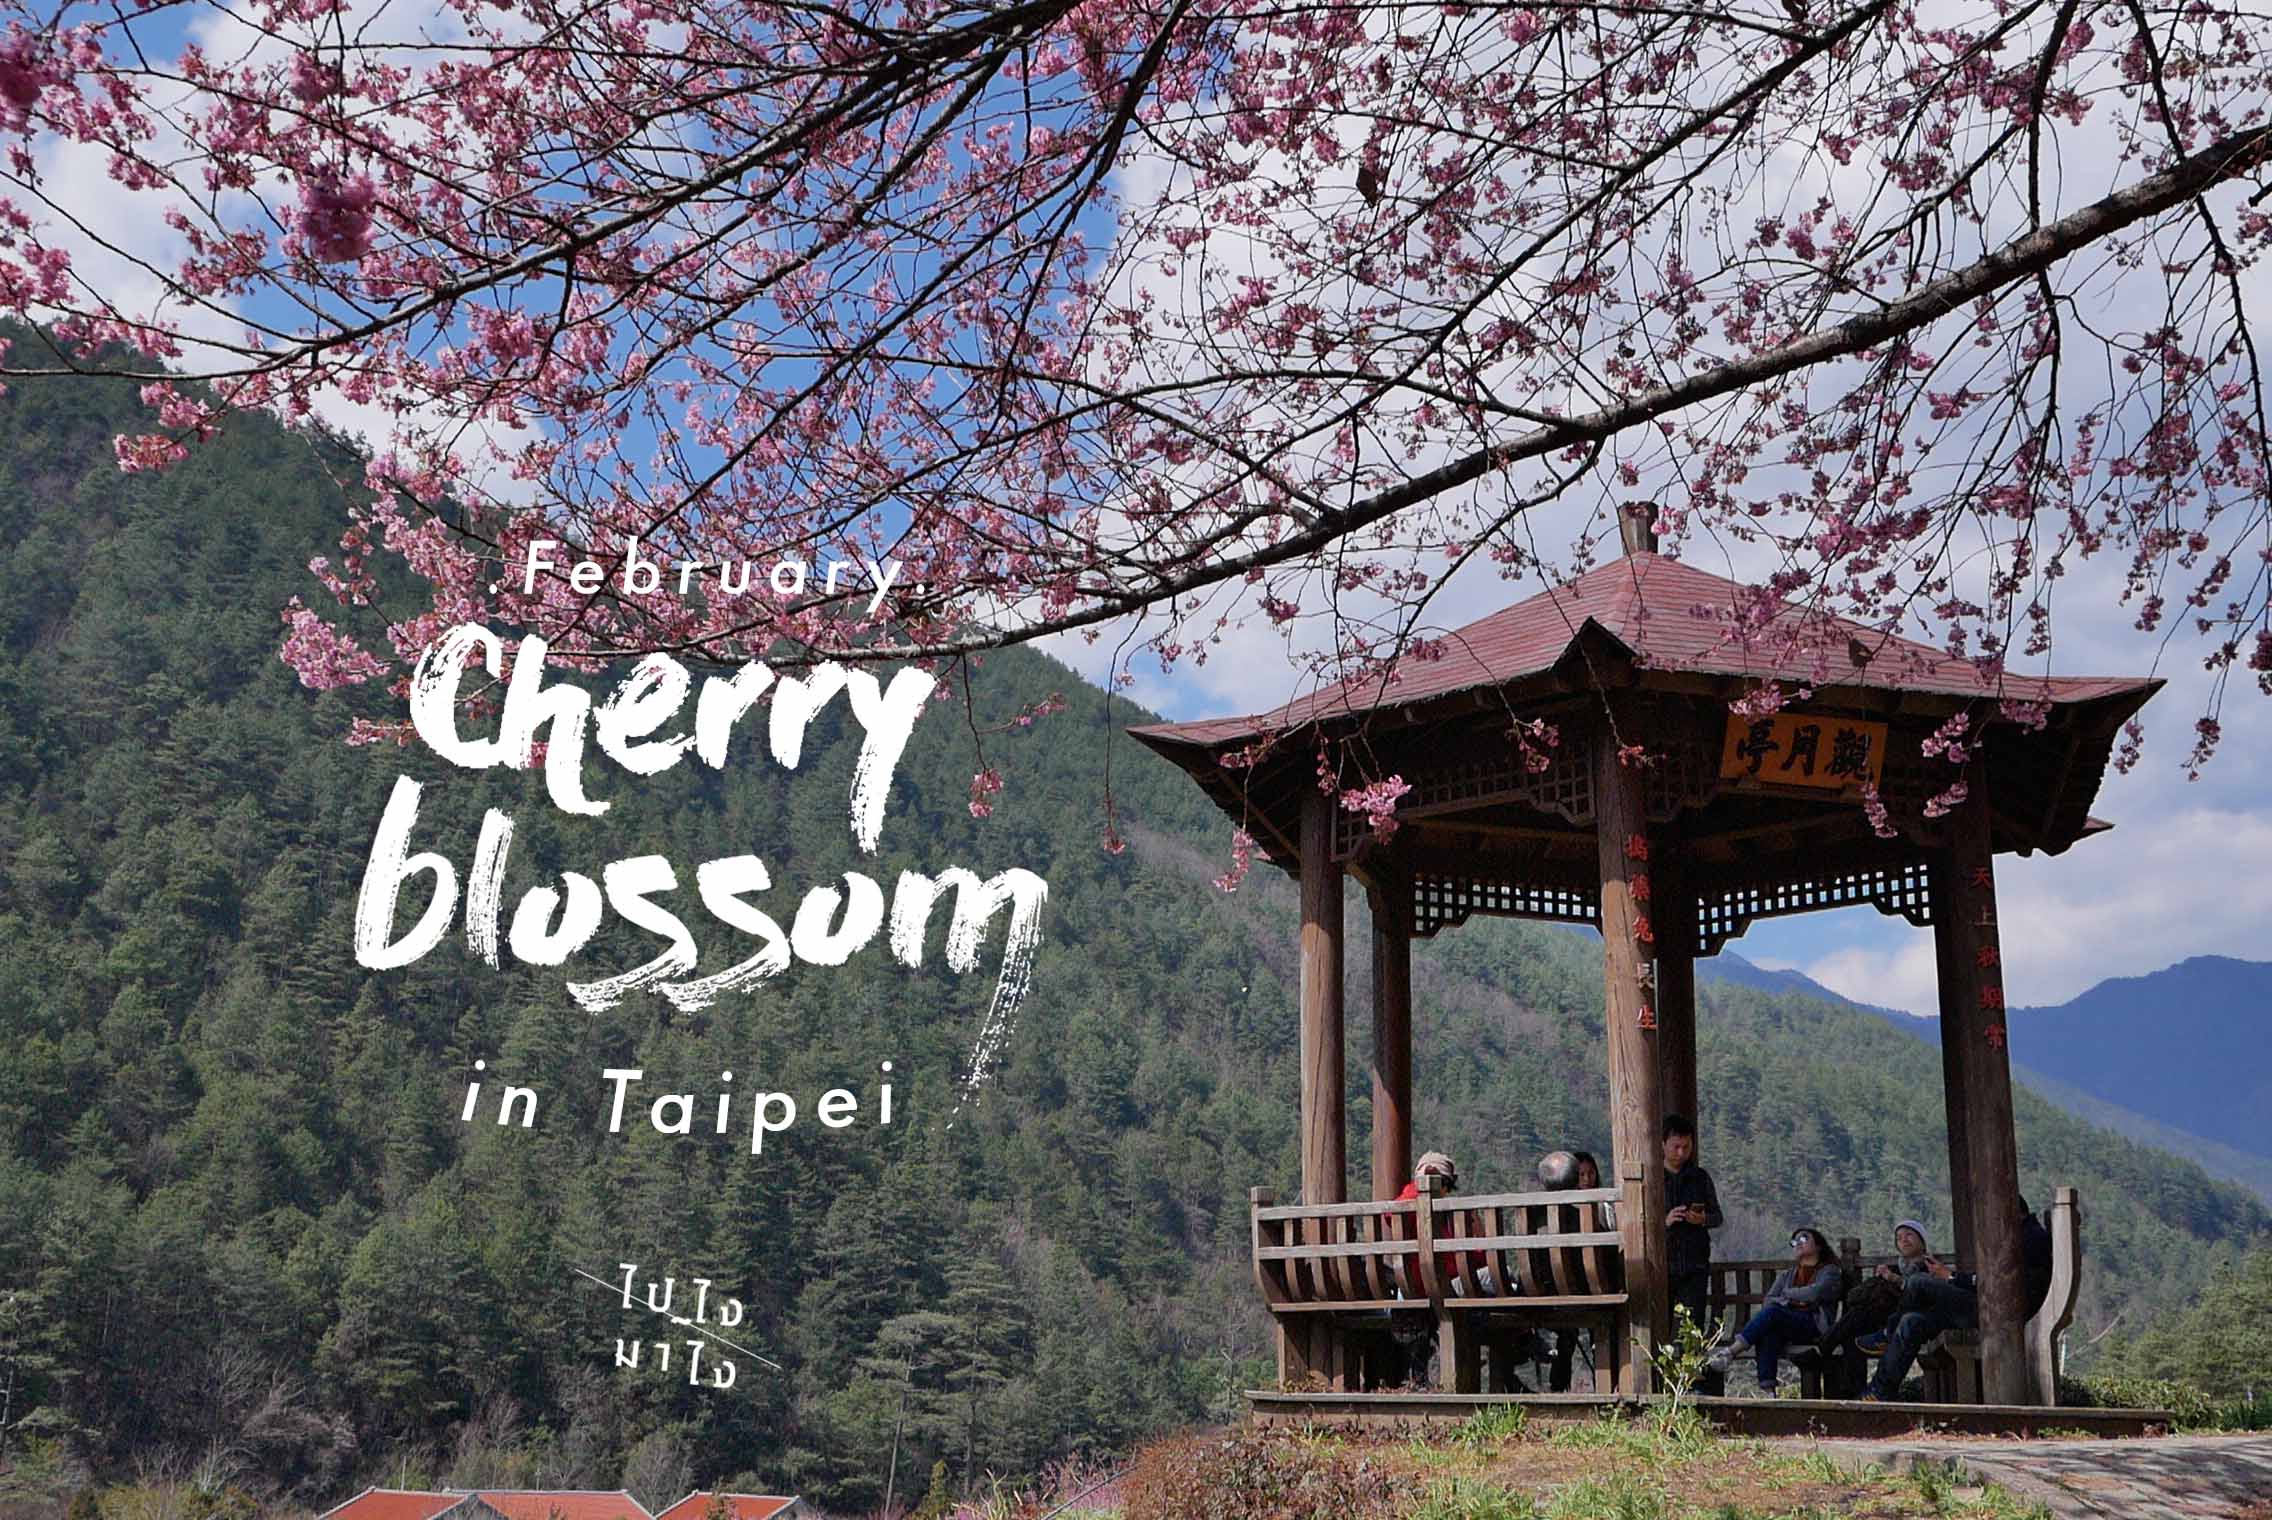 Taiwan’s Cherry Blossom Festival 2017!